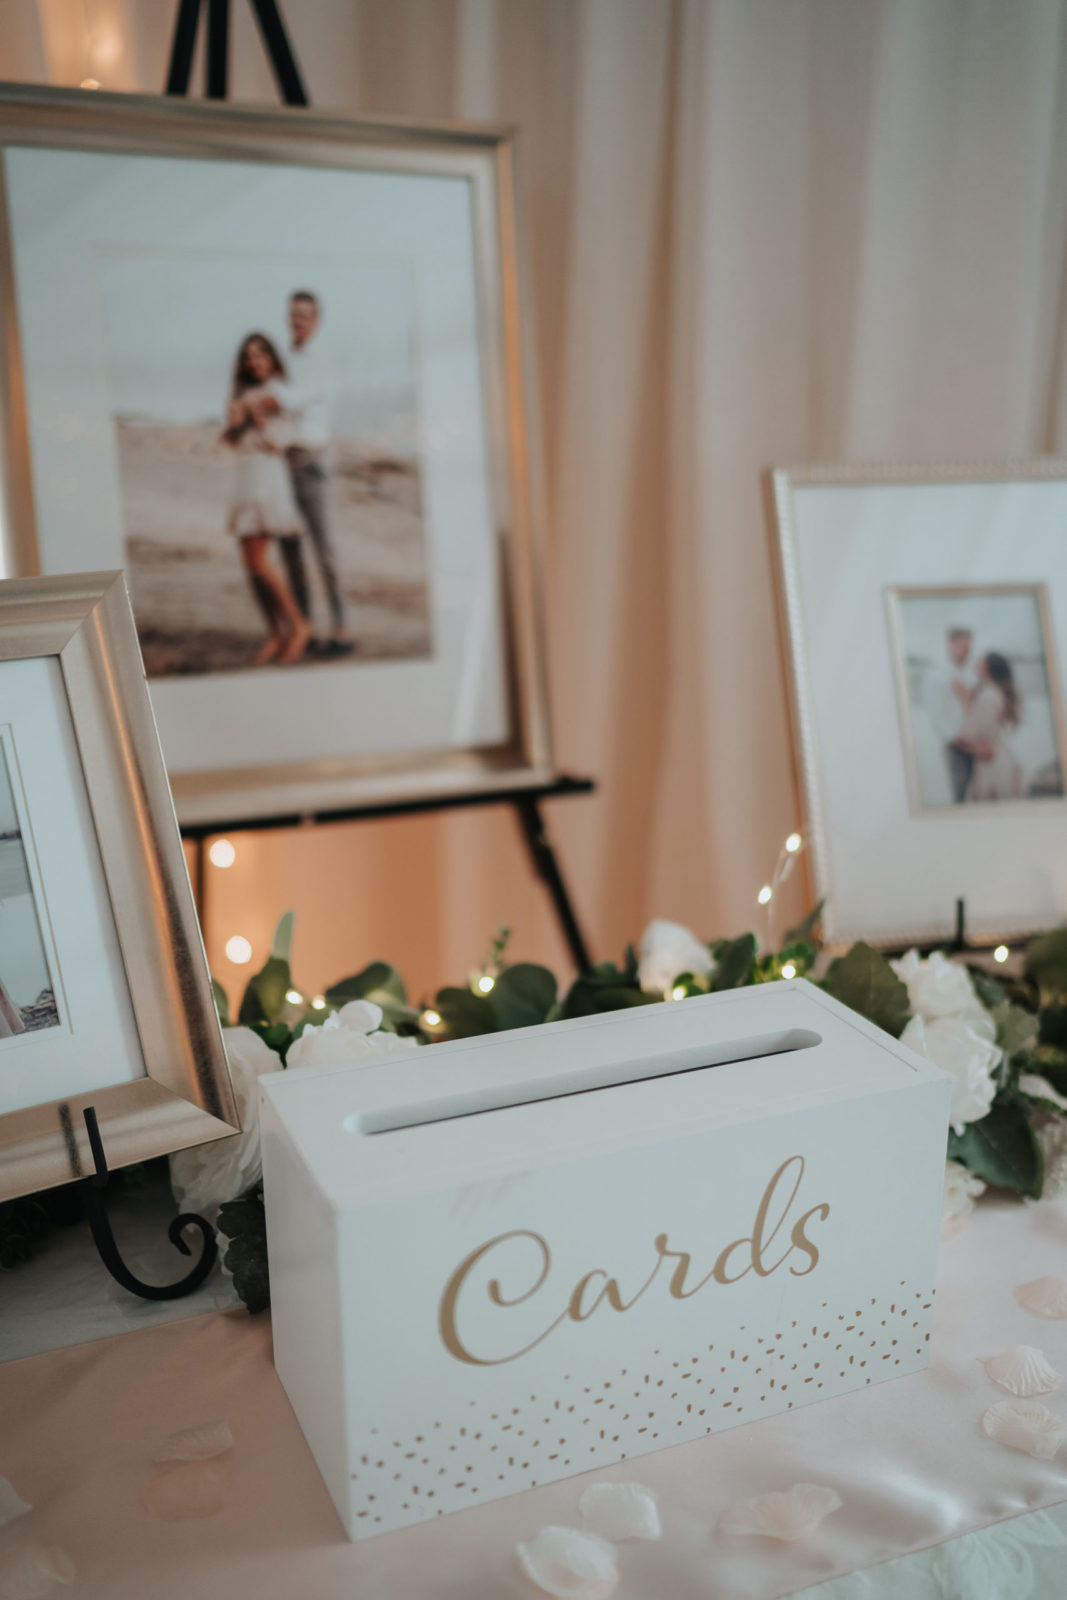 Card box at wedding reception